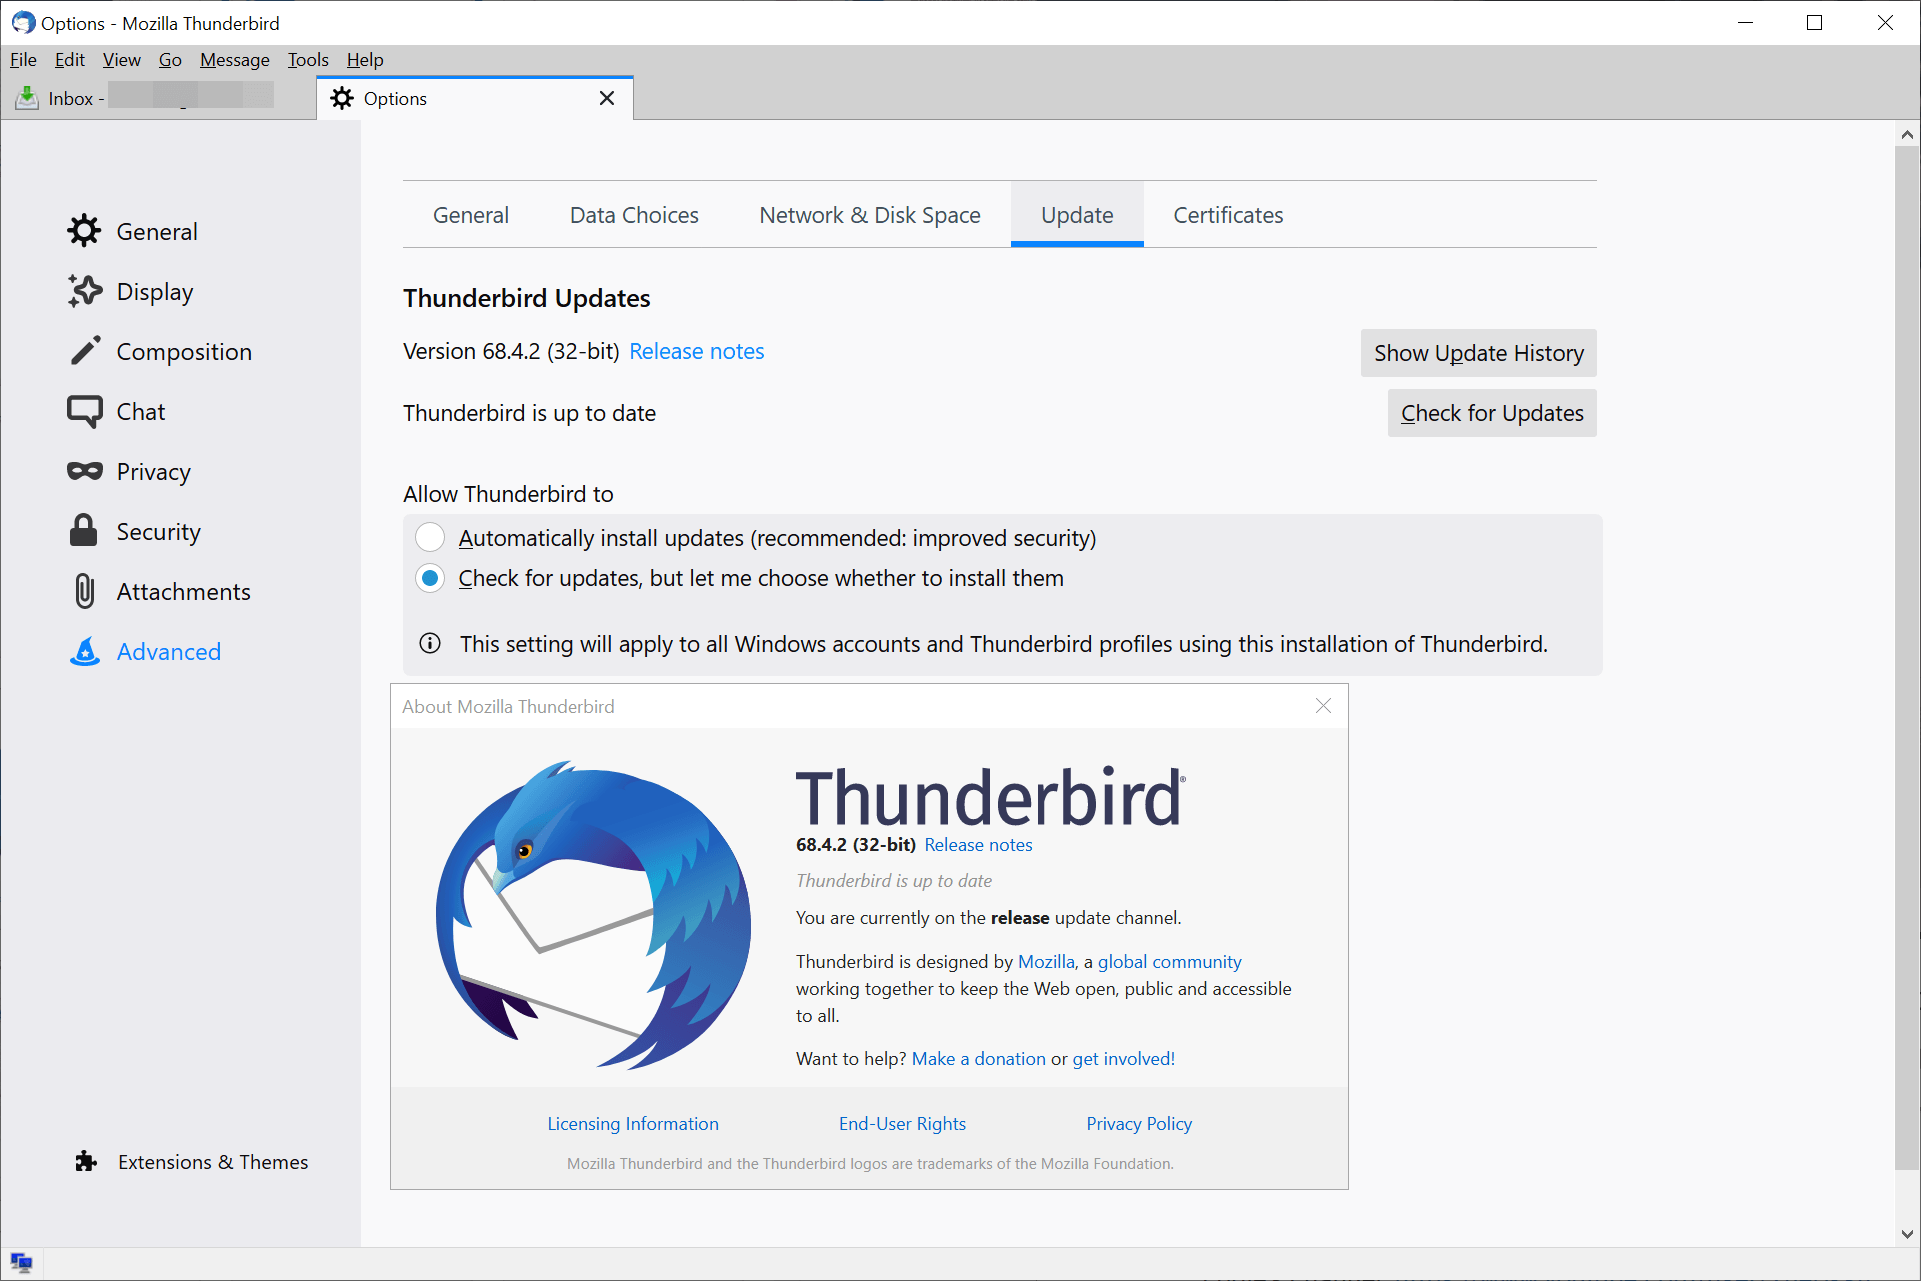 Thunderbird has a new owner